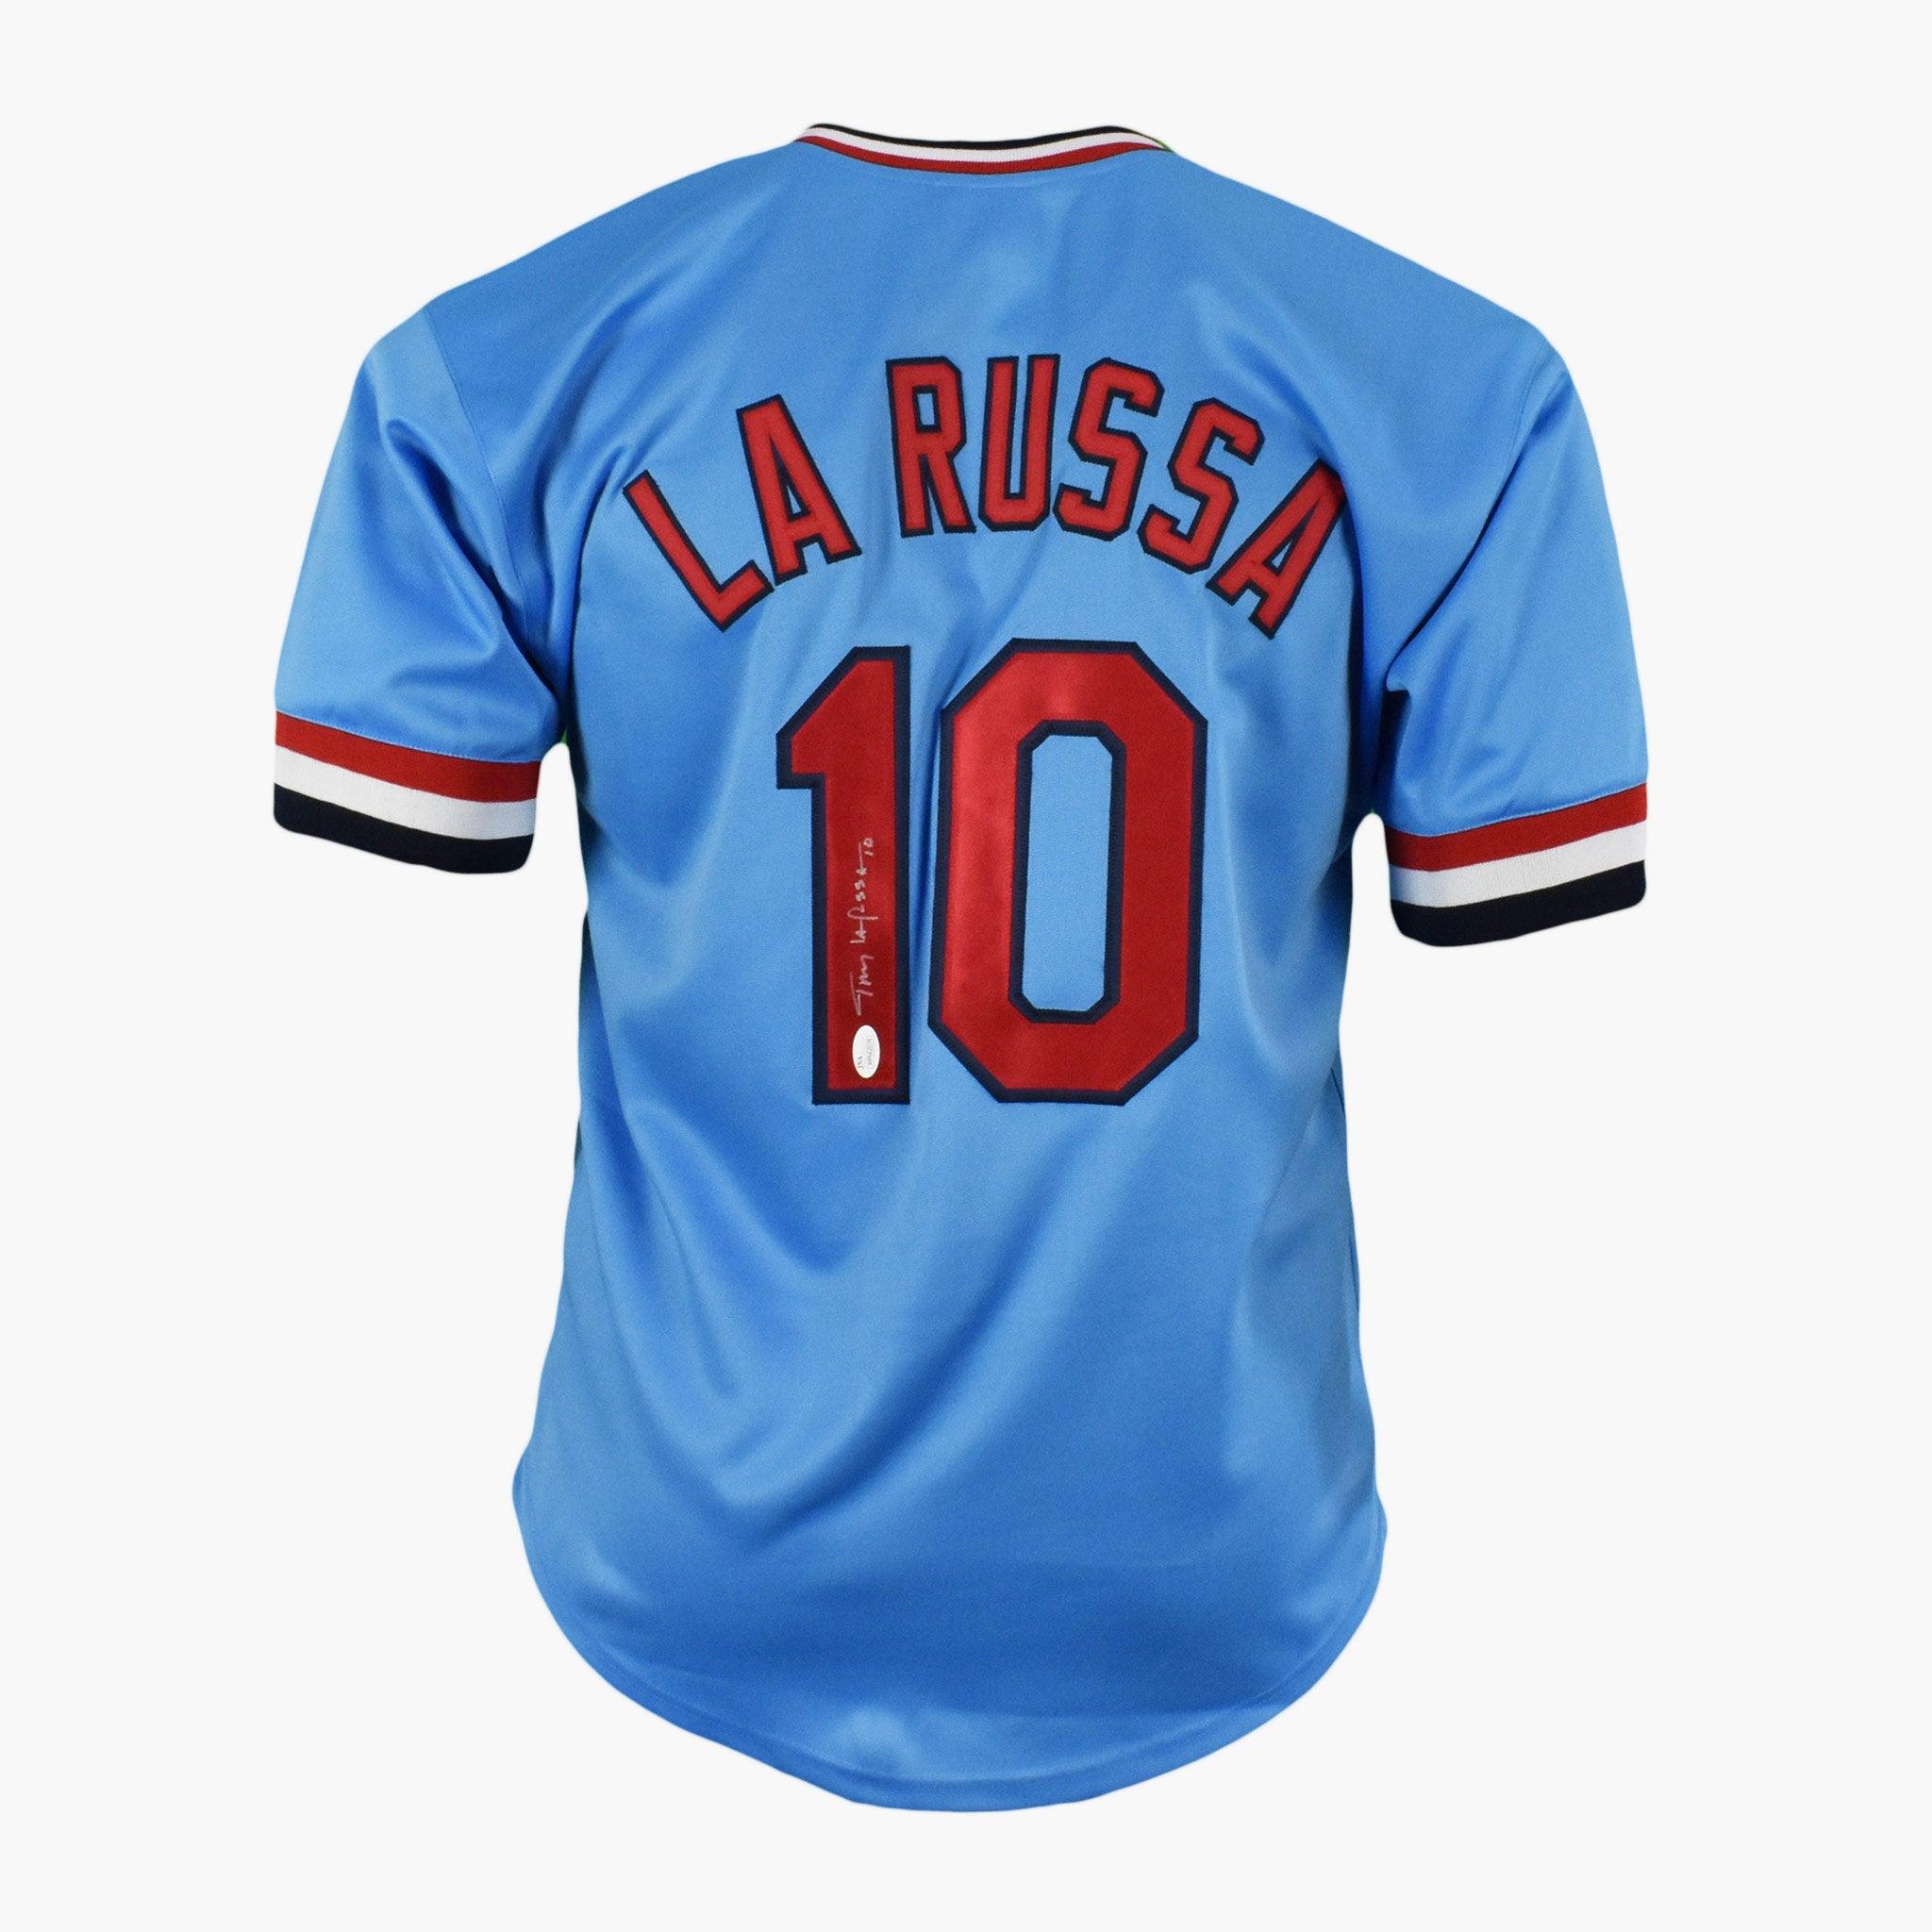 Tony LaRussa Signed St. Louis Blue Baseball Jersey (JSA)